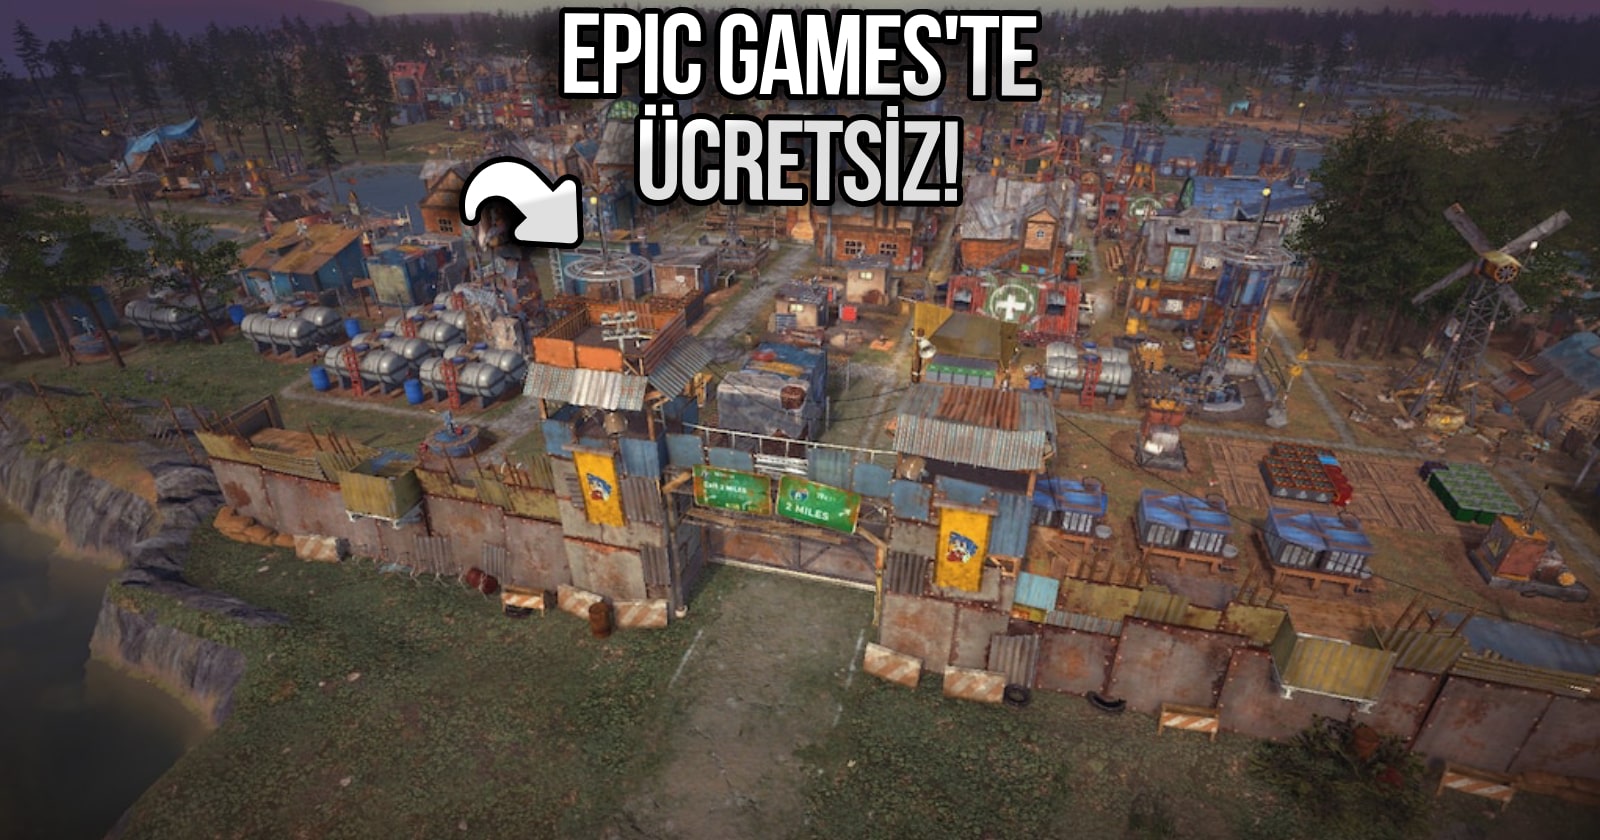 epic-games-surviving-the-aftermath-earthlock-ucretsiz-oyun-kapak-min.jpg